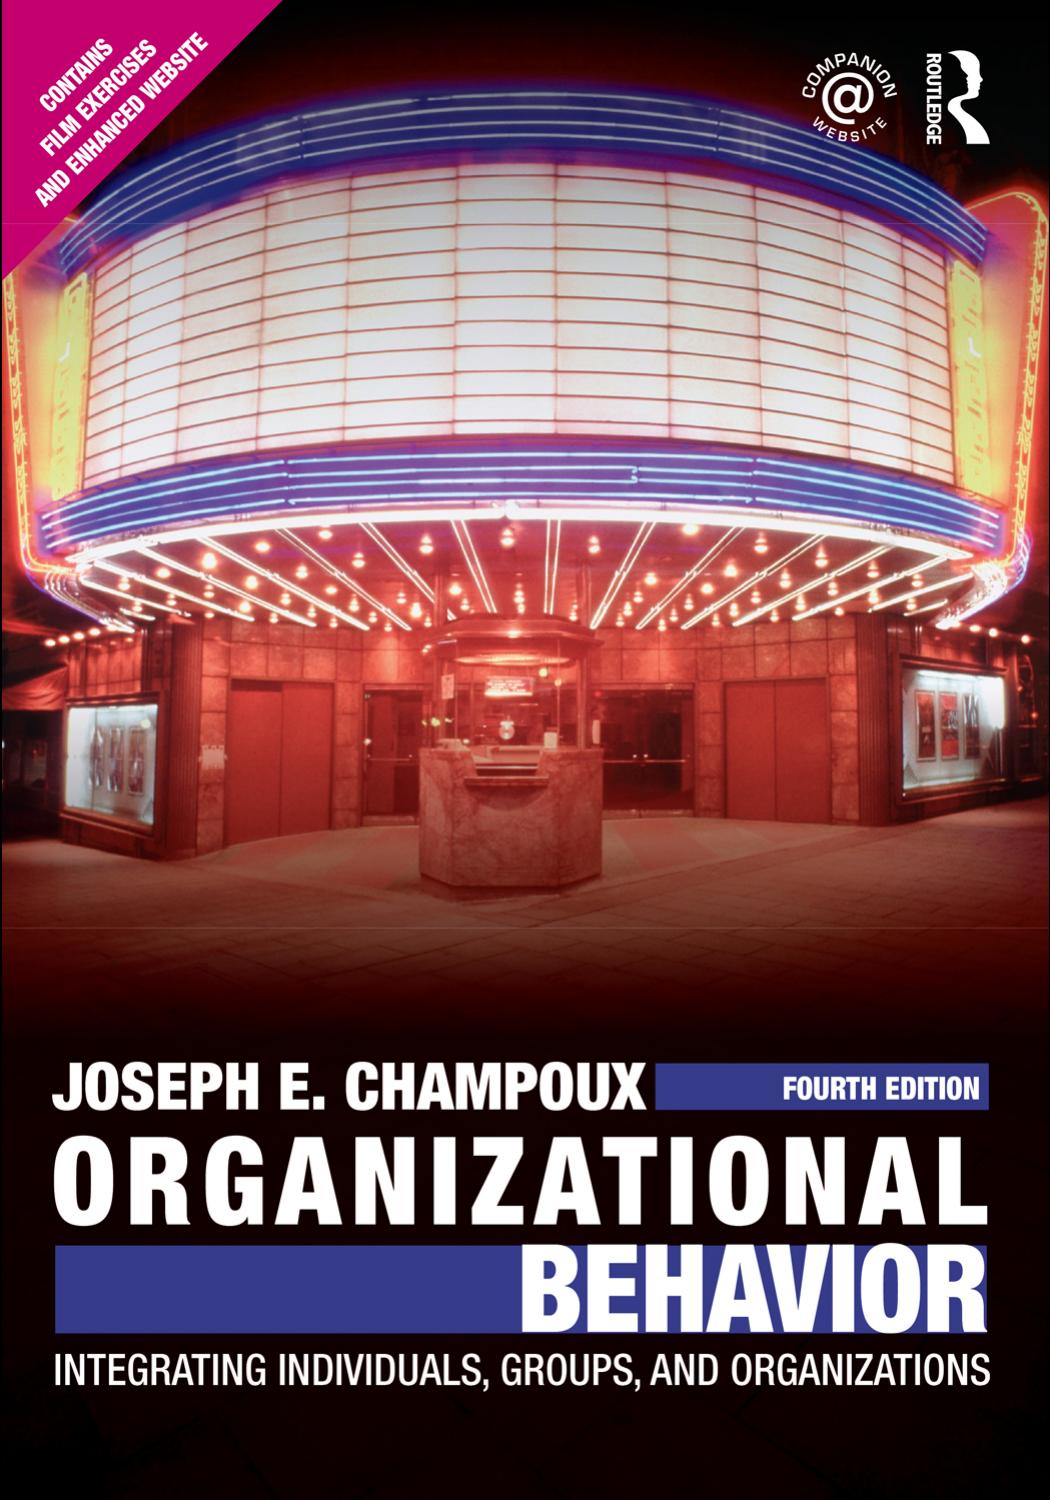 ORGANIZATIONAL BEHAVIOR: INTEGRATING INDIVIDUALS, GROUPS, AND ORGANIZATIONS, Fourth Edition